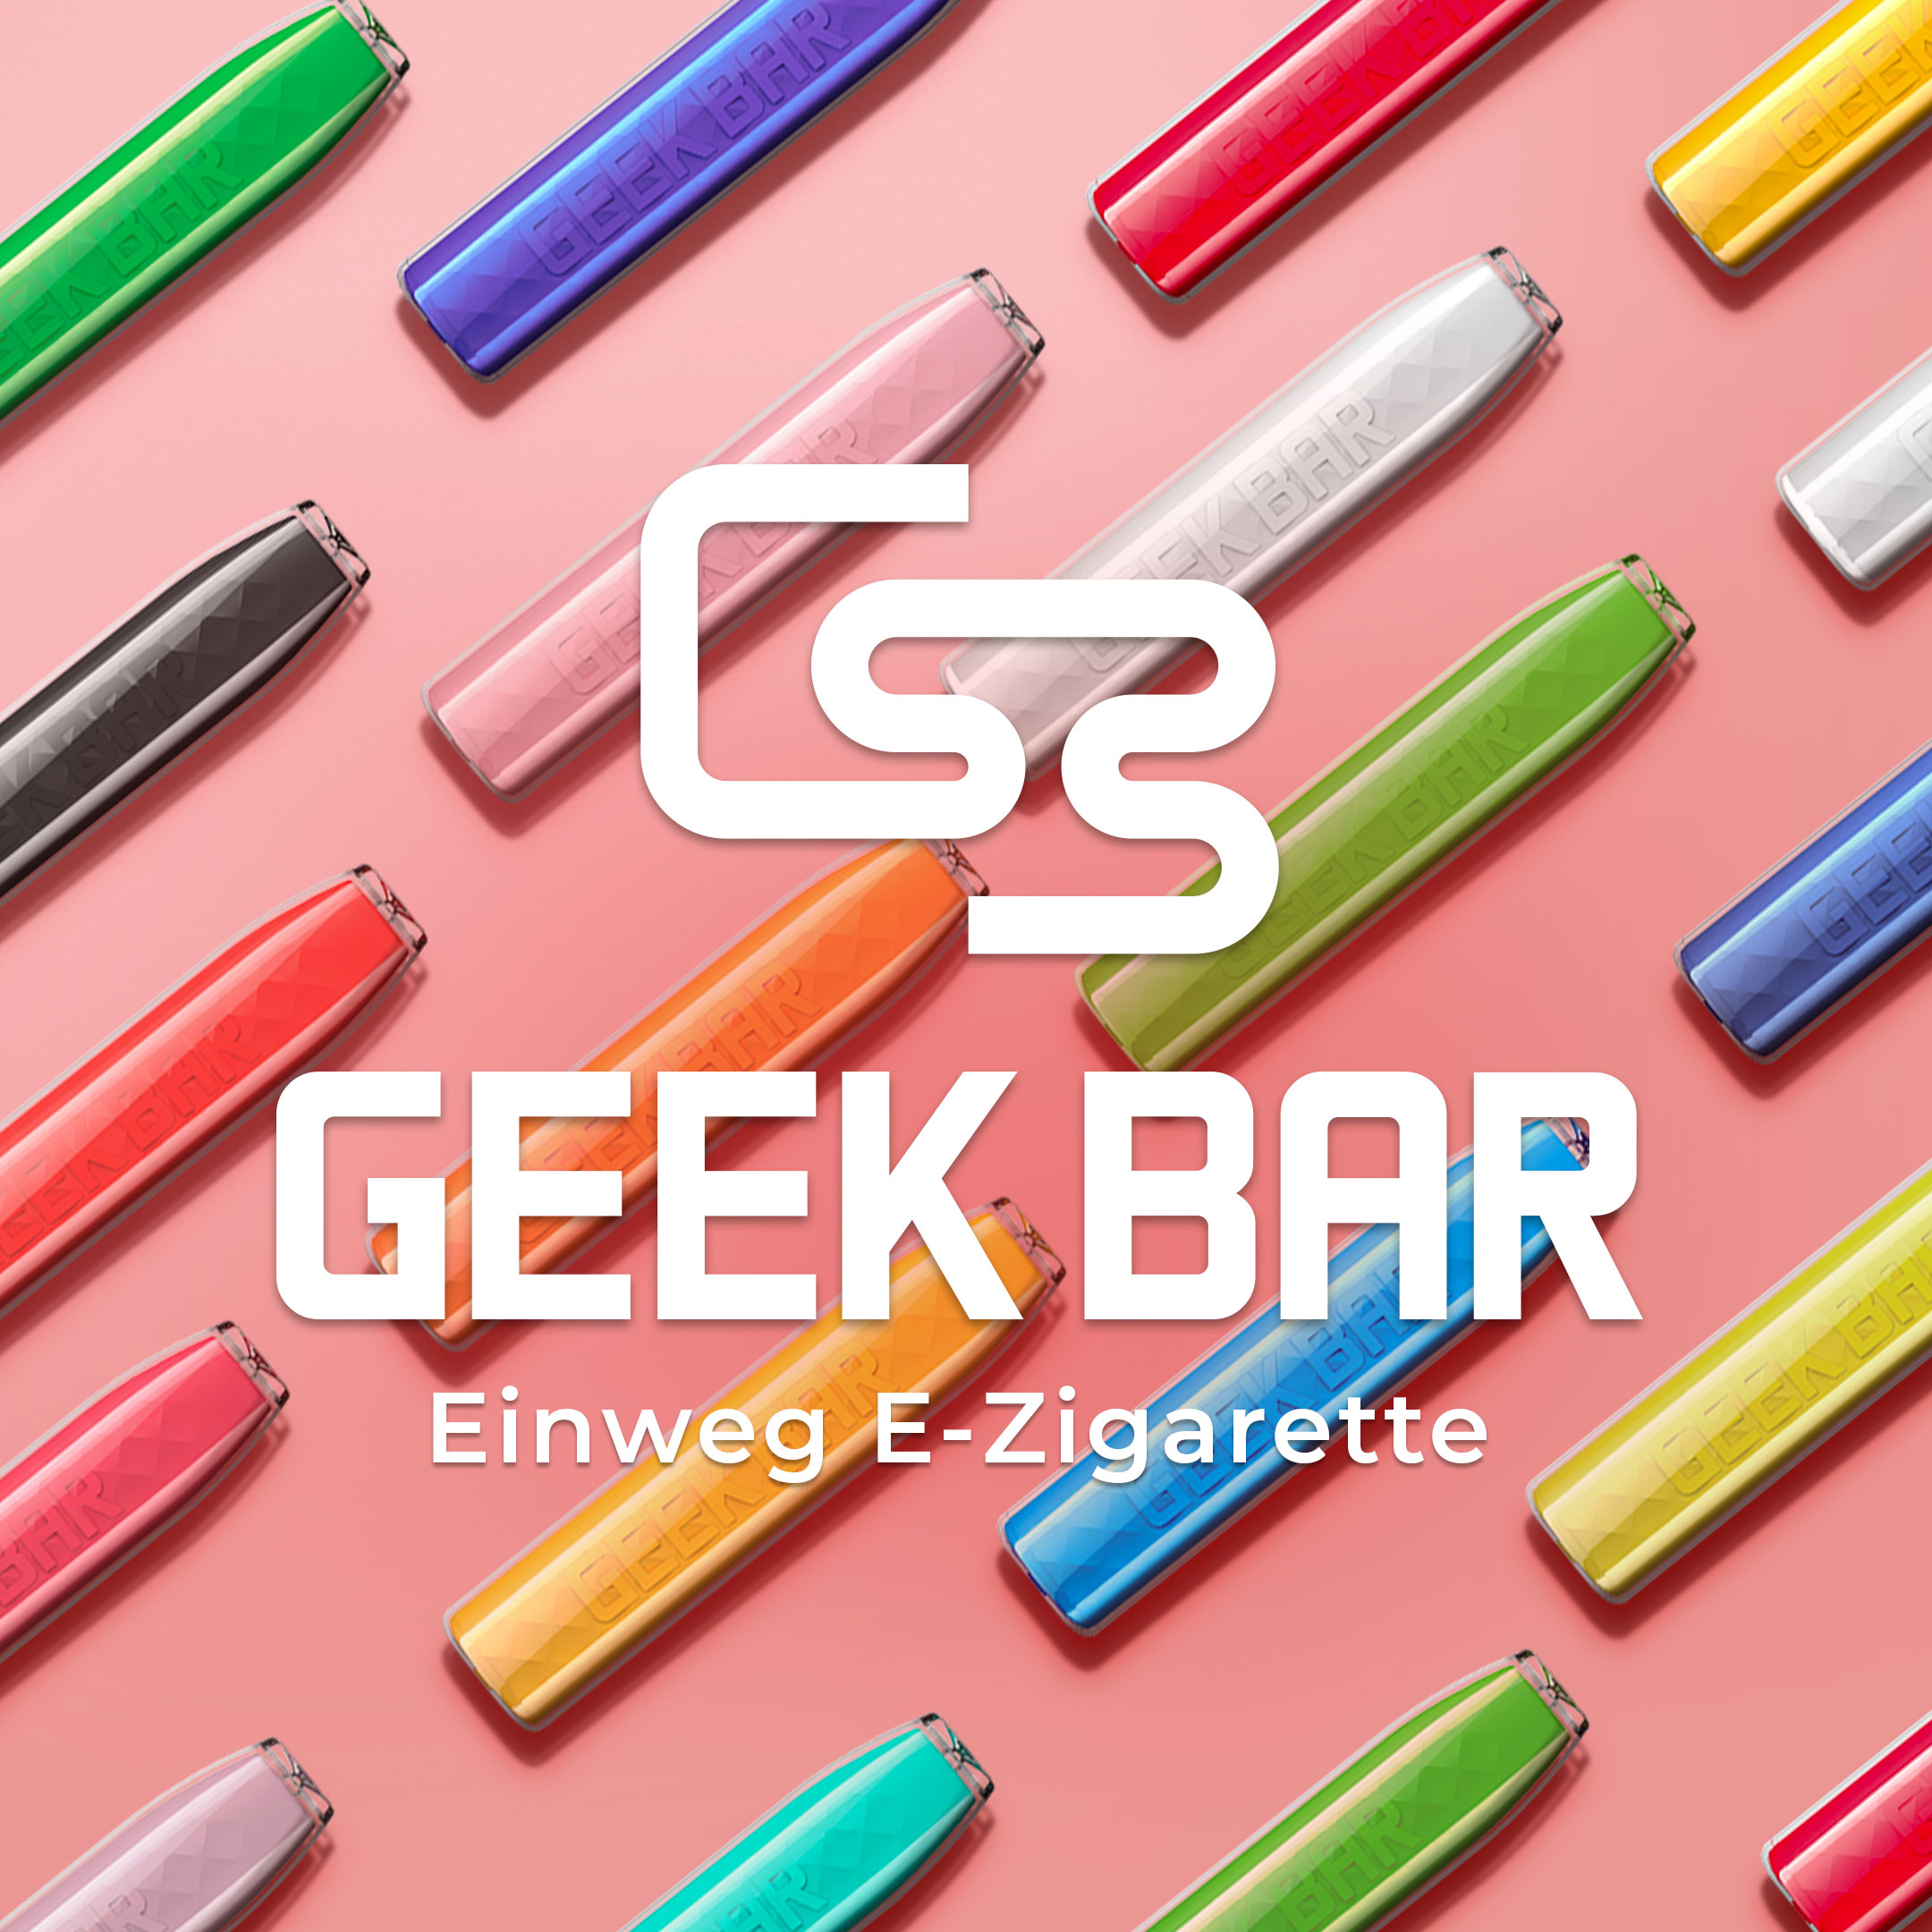 GEEKBAR by Geekvape - Einweg E-Zigarette Vape Pen 20mg/ml Tobacco